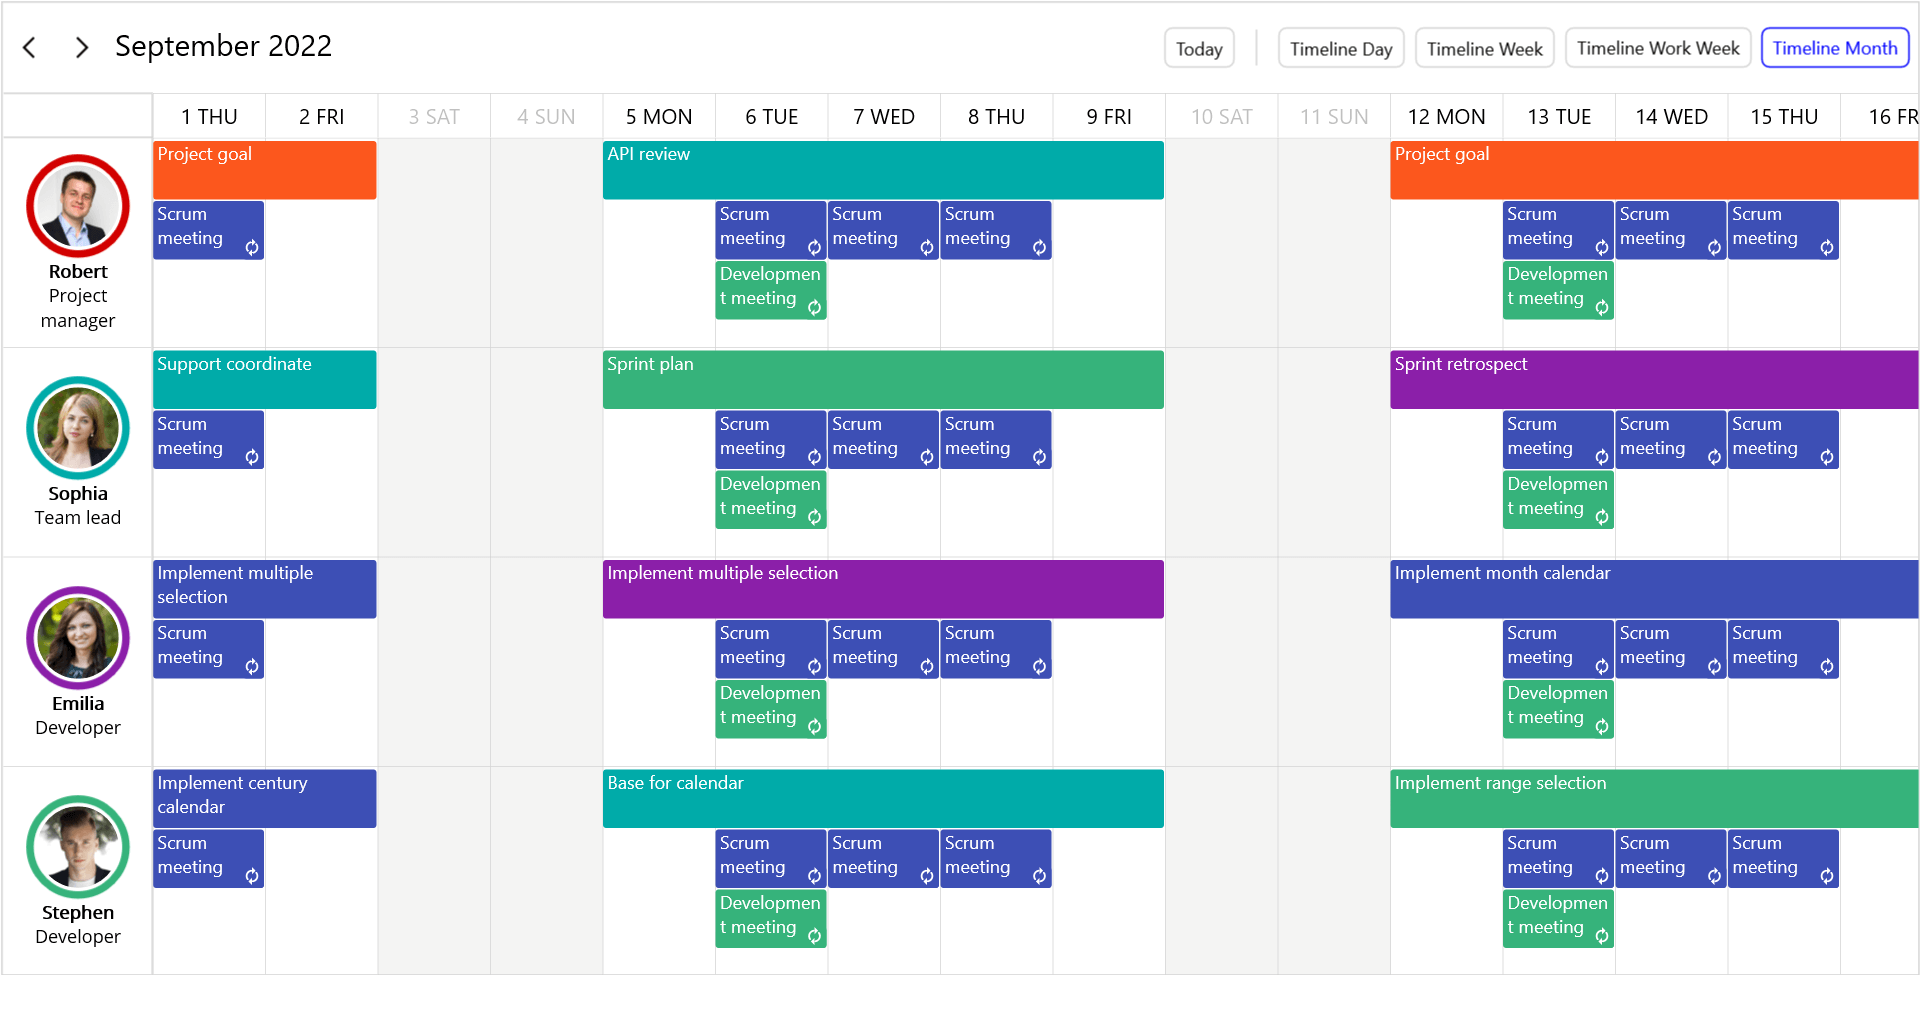 Project planning calendar in .NET MAUI